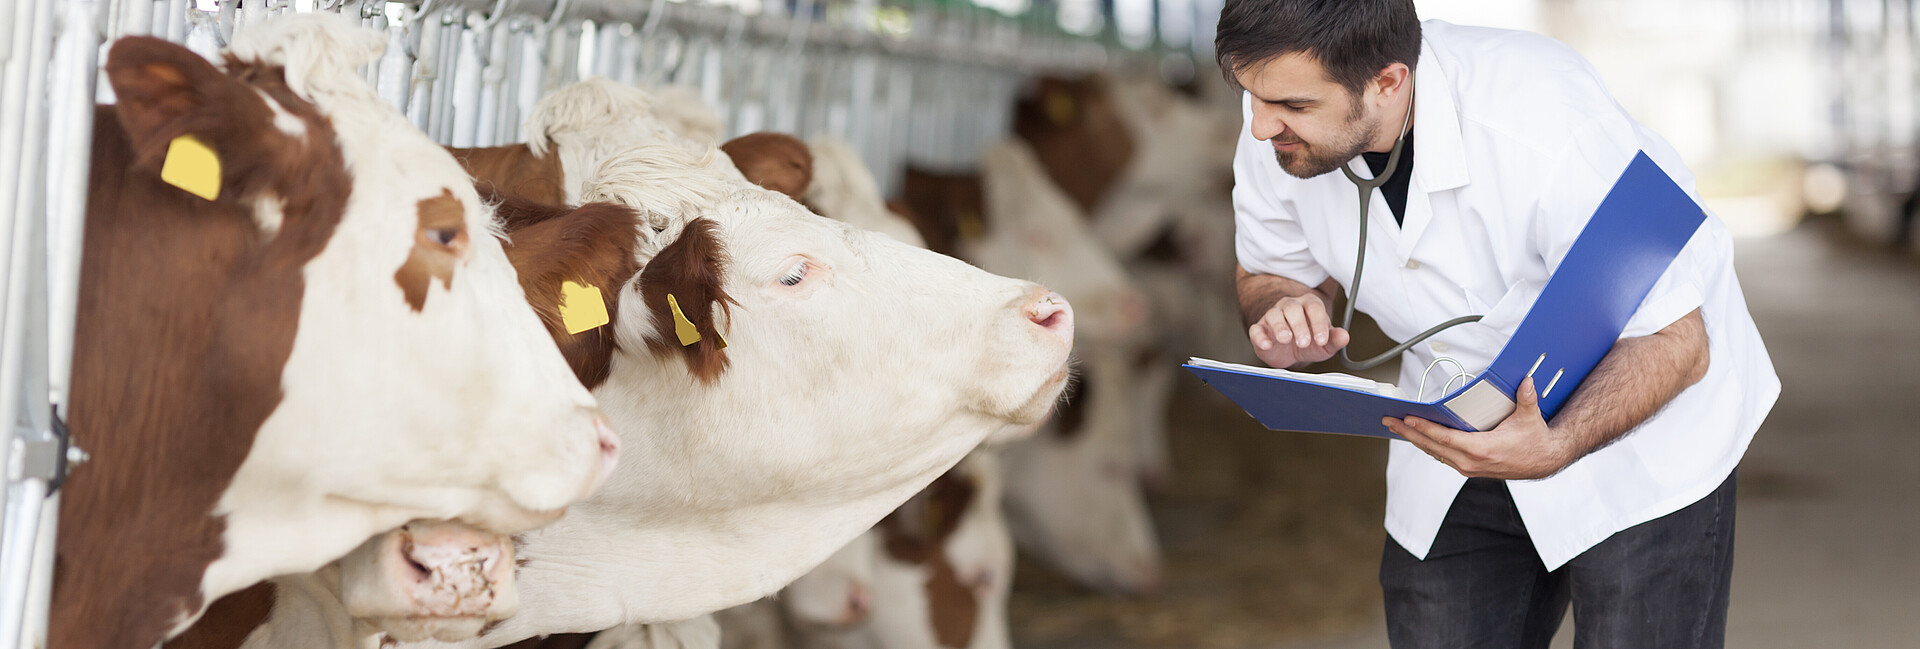 Tierarzt untersucht Kühe